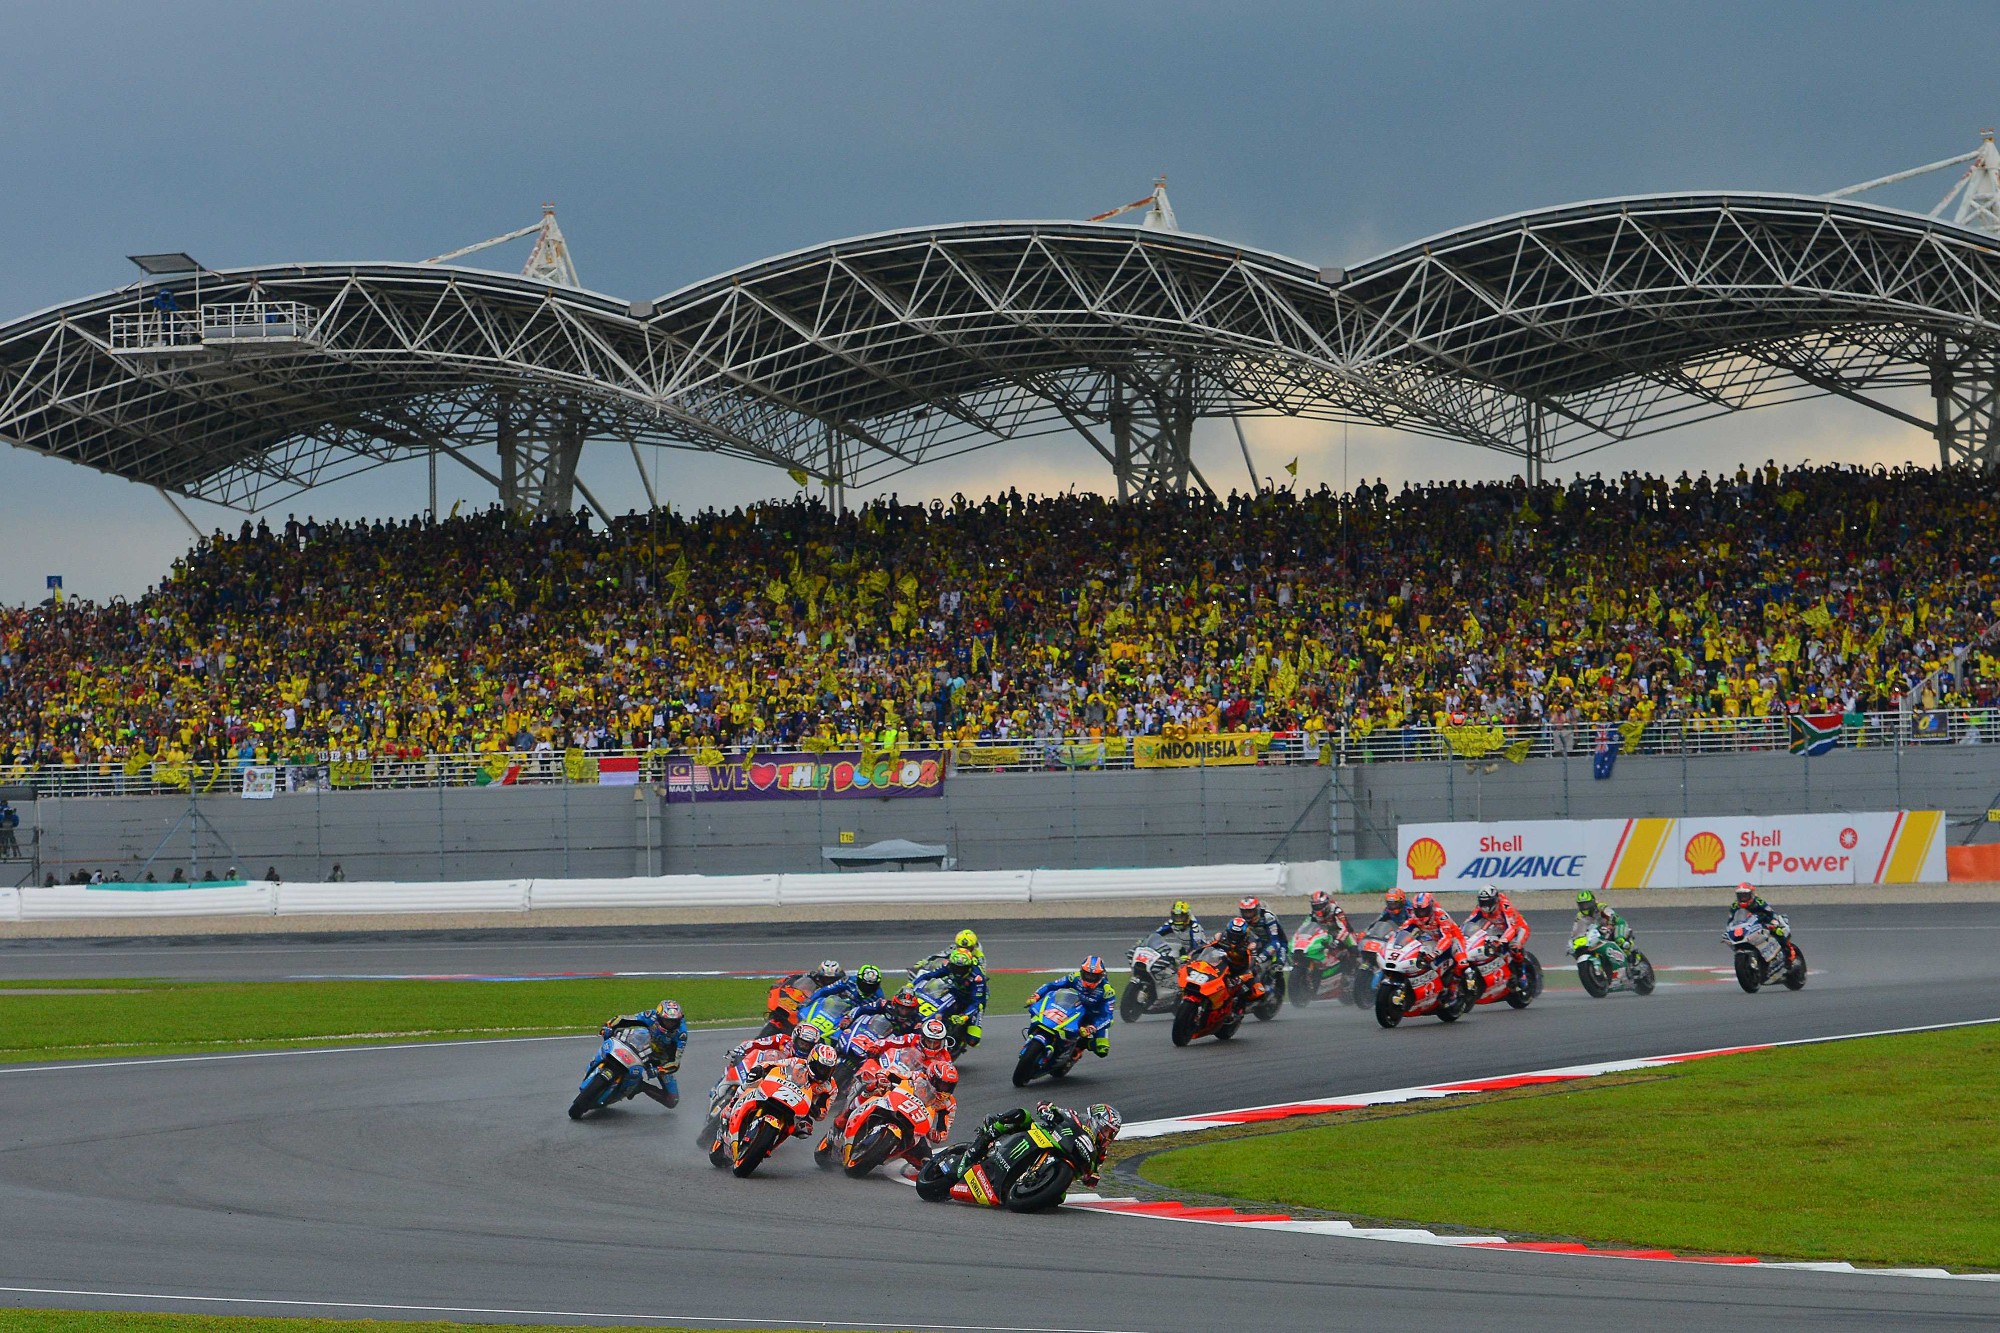 MotoGP: Dorna Previews The Malaysian Grand Prix At Sepang International  Circuit - Roadracing World Magazine | Motorcycle Riding, Racing & Tech News